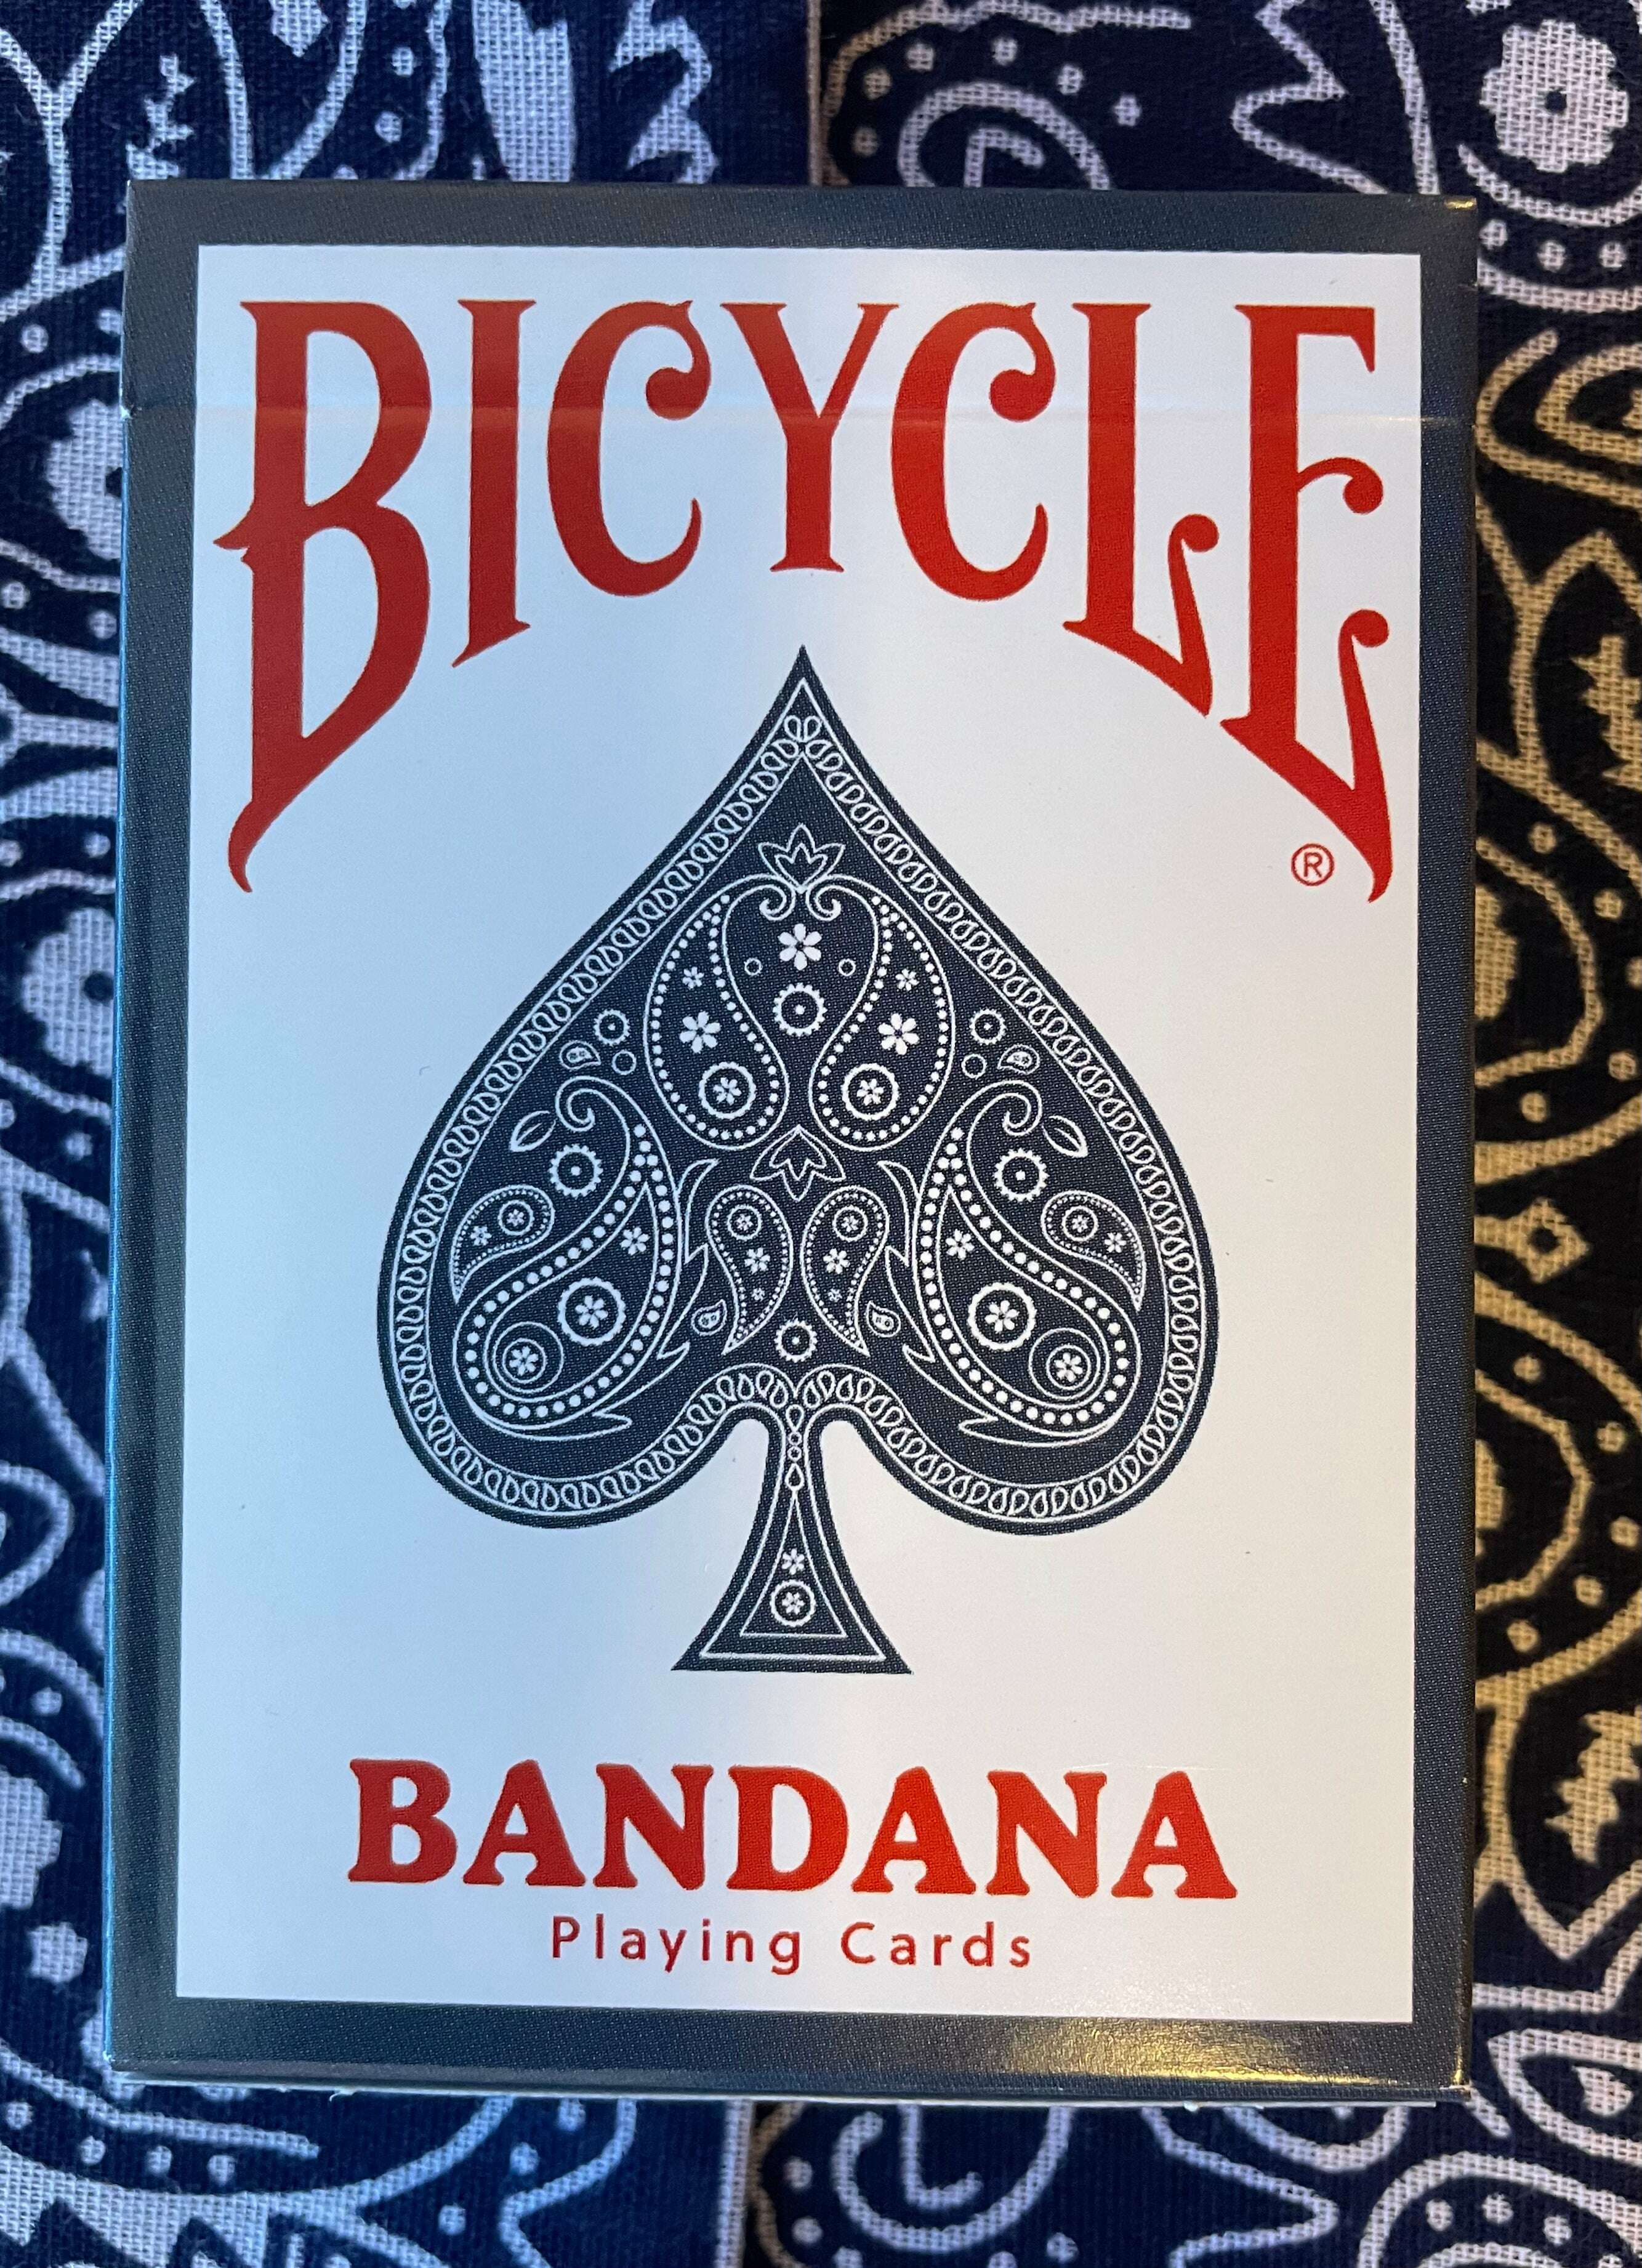 Bicycle Bandana Playing Cards 2-Deck Set